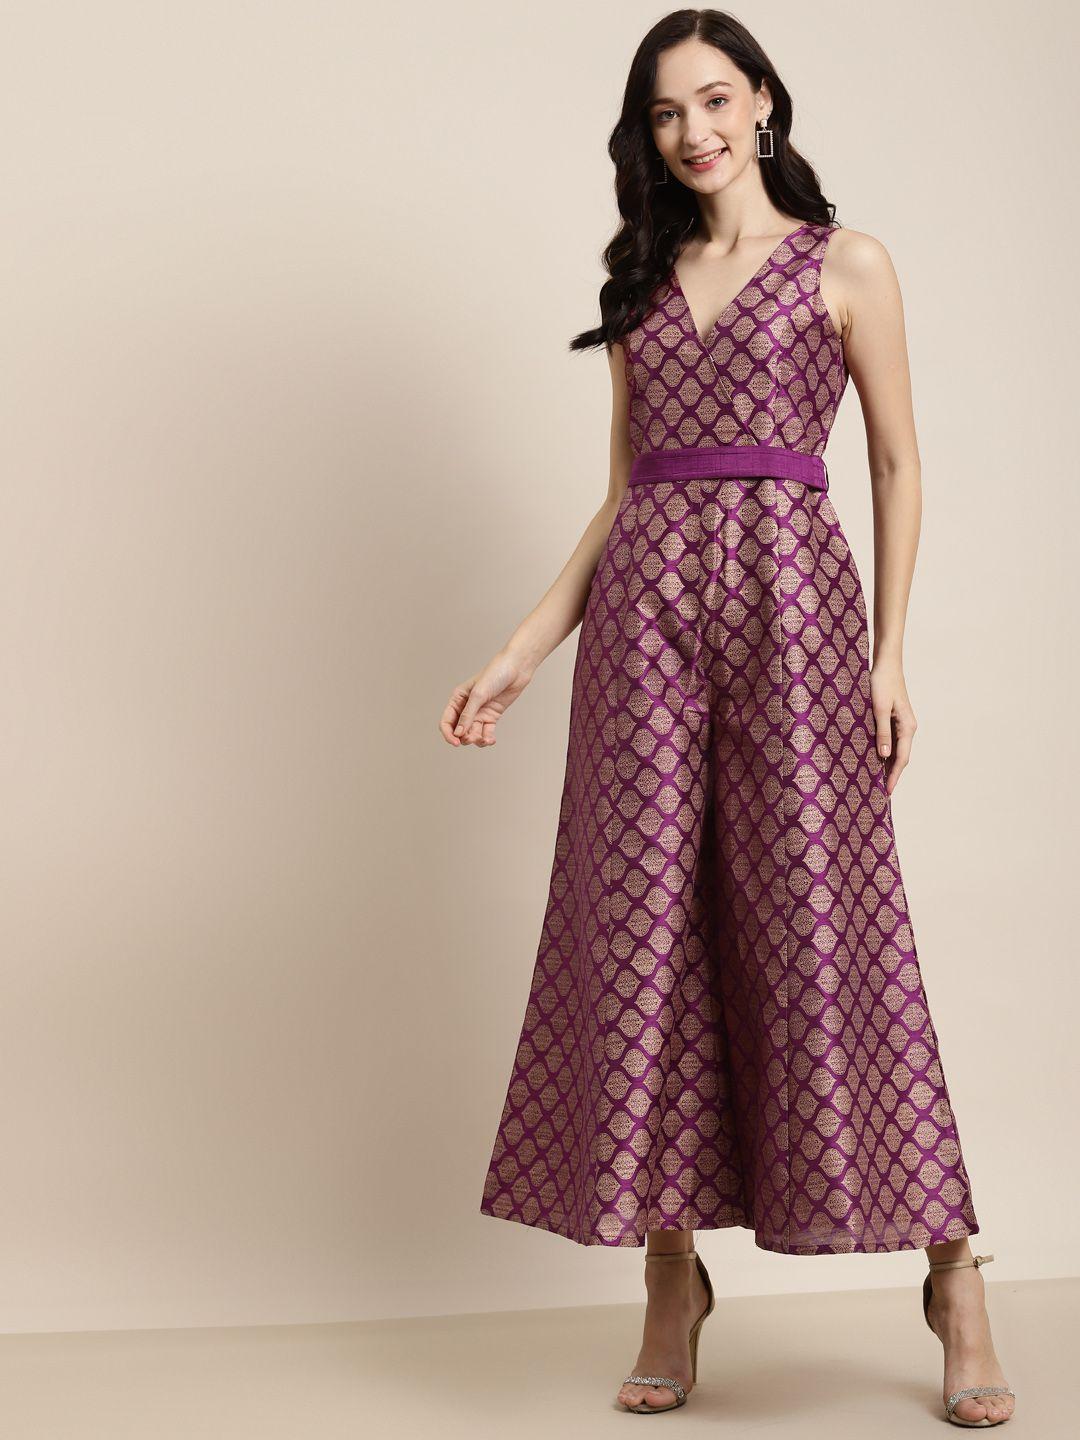 shae-by-sassafras-purple-&-gold-toned-printed-fabric-belt-basic-jumpsuit